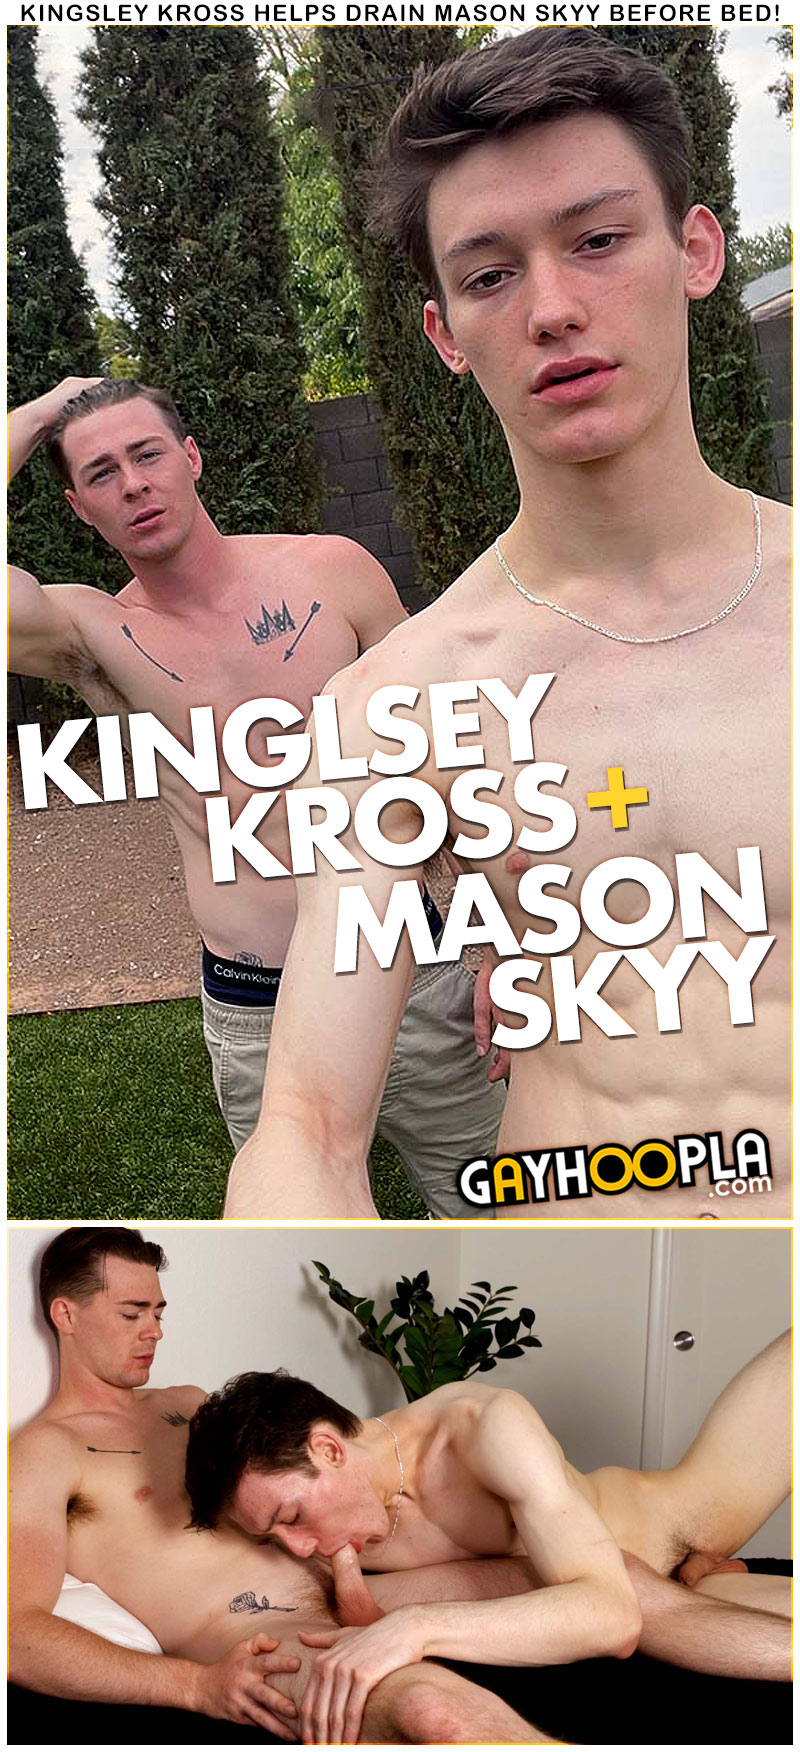 Kingsley Kross Helps Drain Mason Skyy Before Bed! in 'BRO JOBs' at GayHoopla